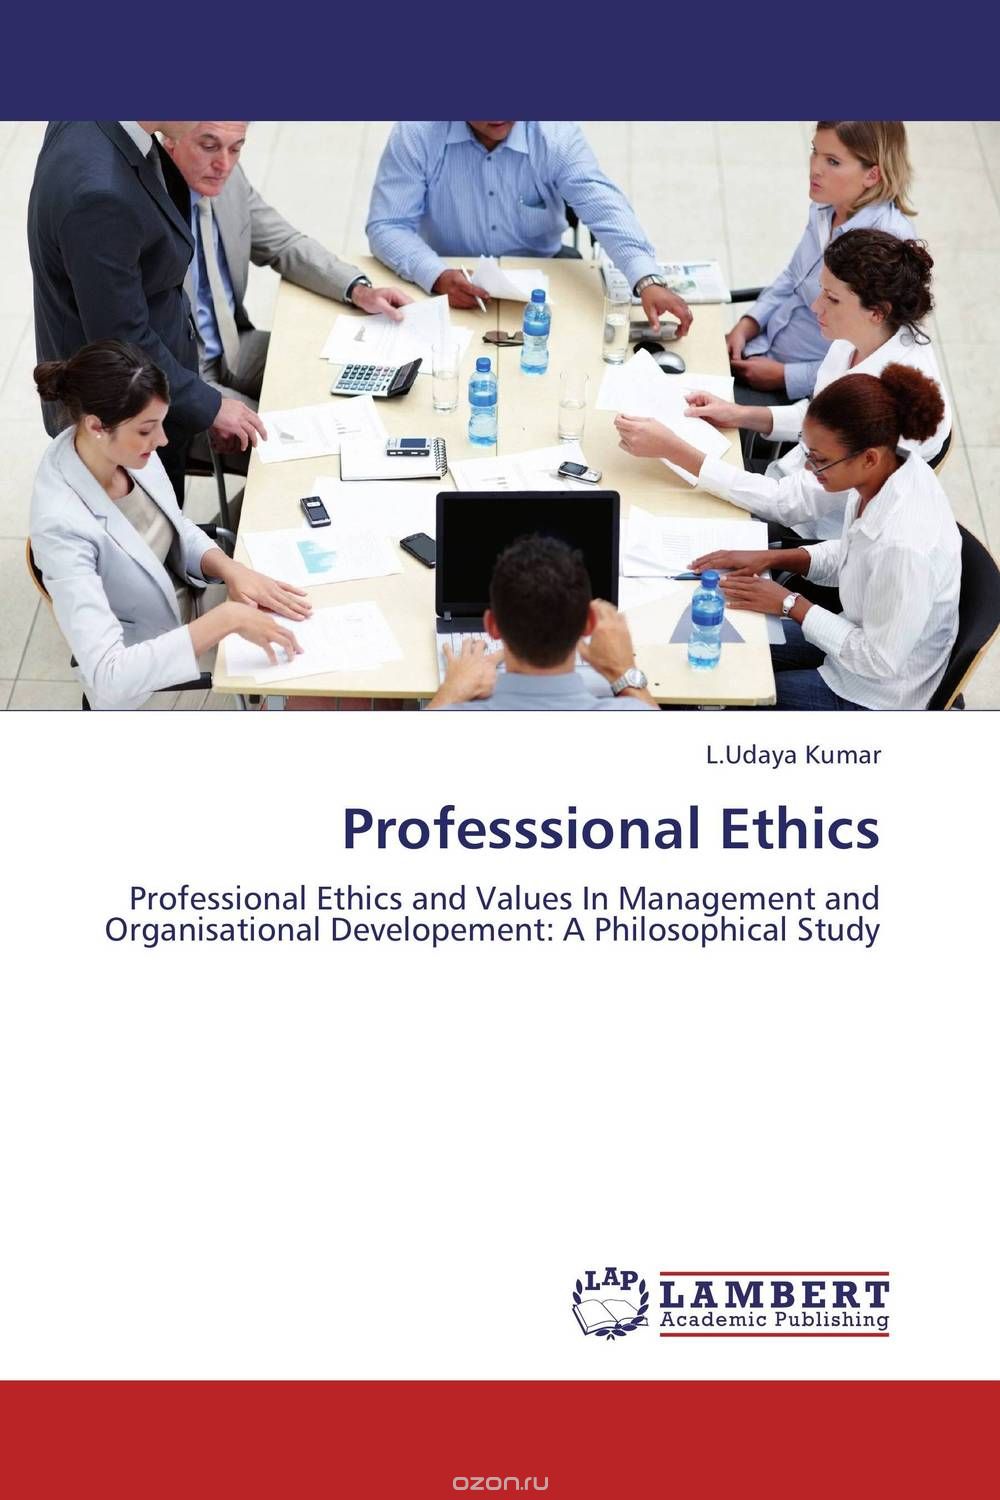 Professsional Ethics